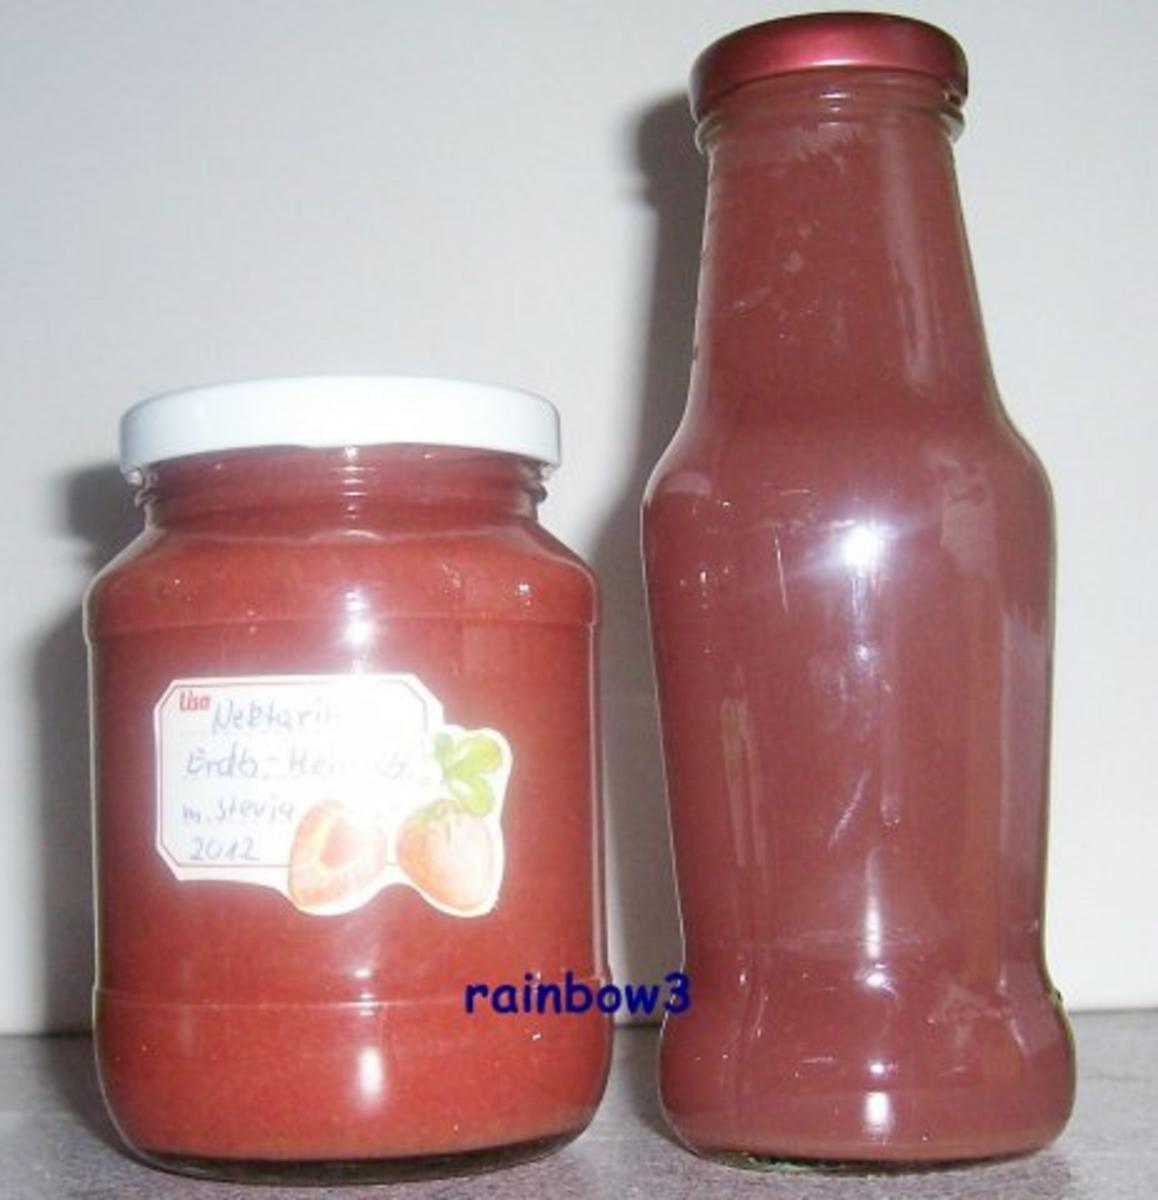 Einmachen: Nektarinen-Erdbeer-Heidelbeer-Marmelade - Rezept